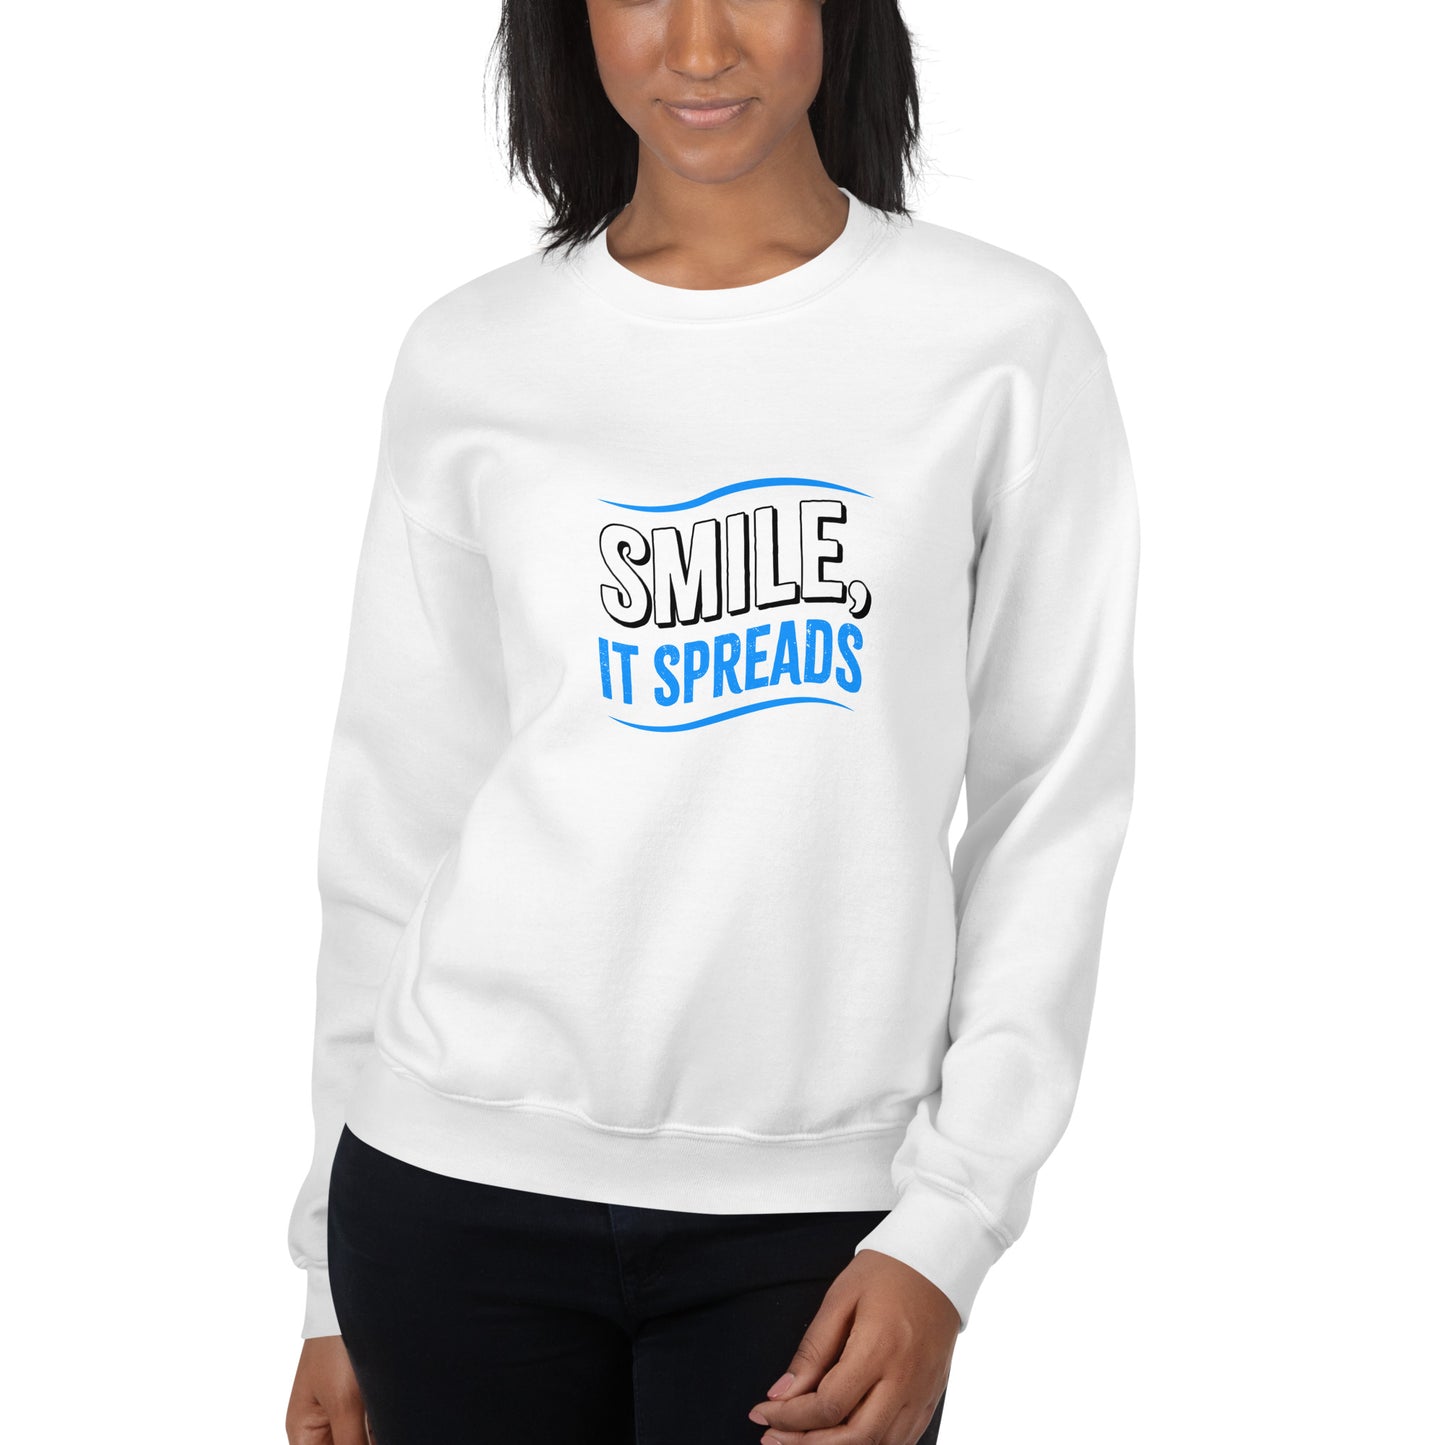 Smile, It Spreads Unisex Sweatshirts